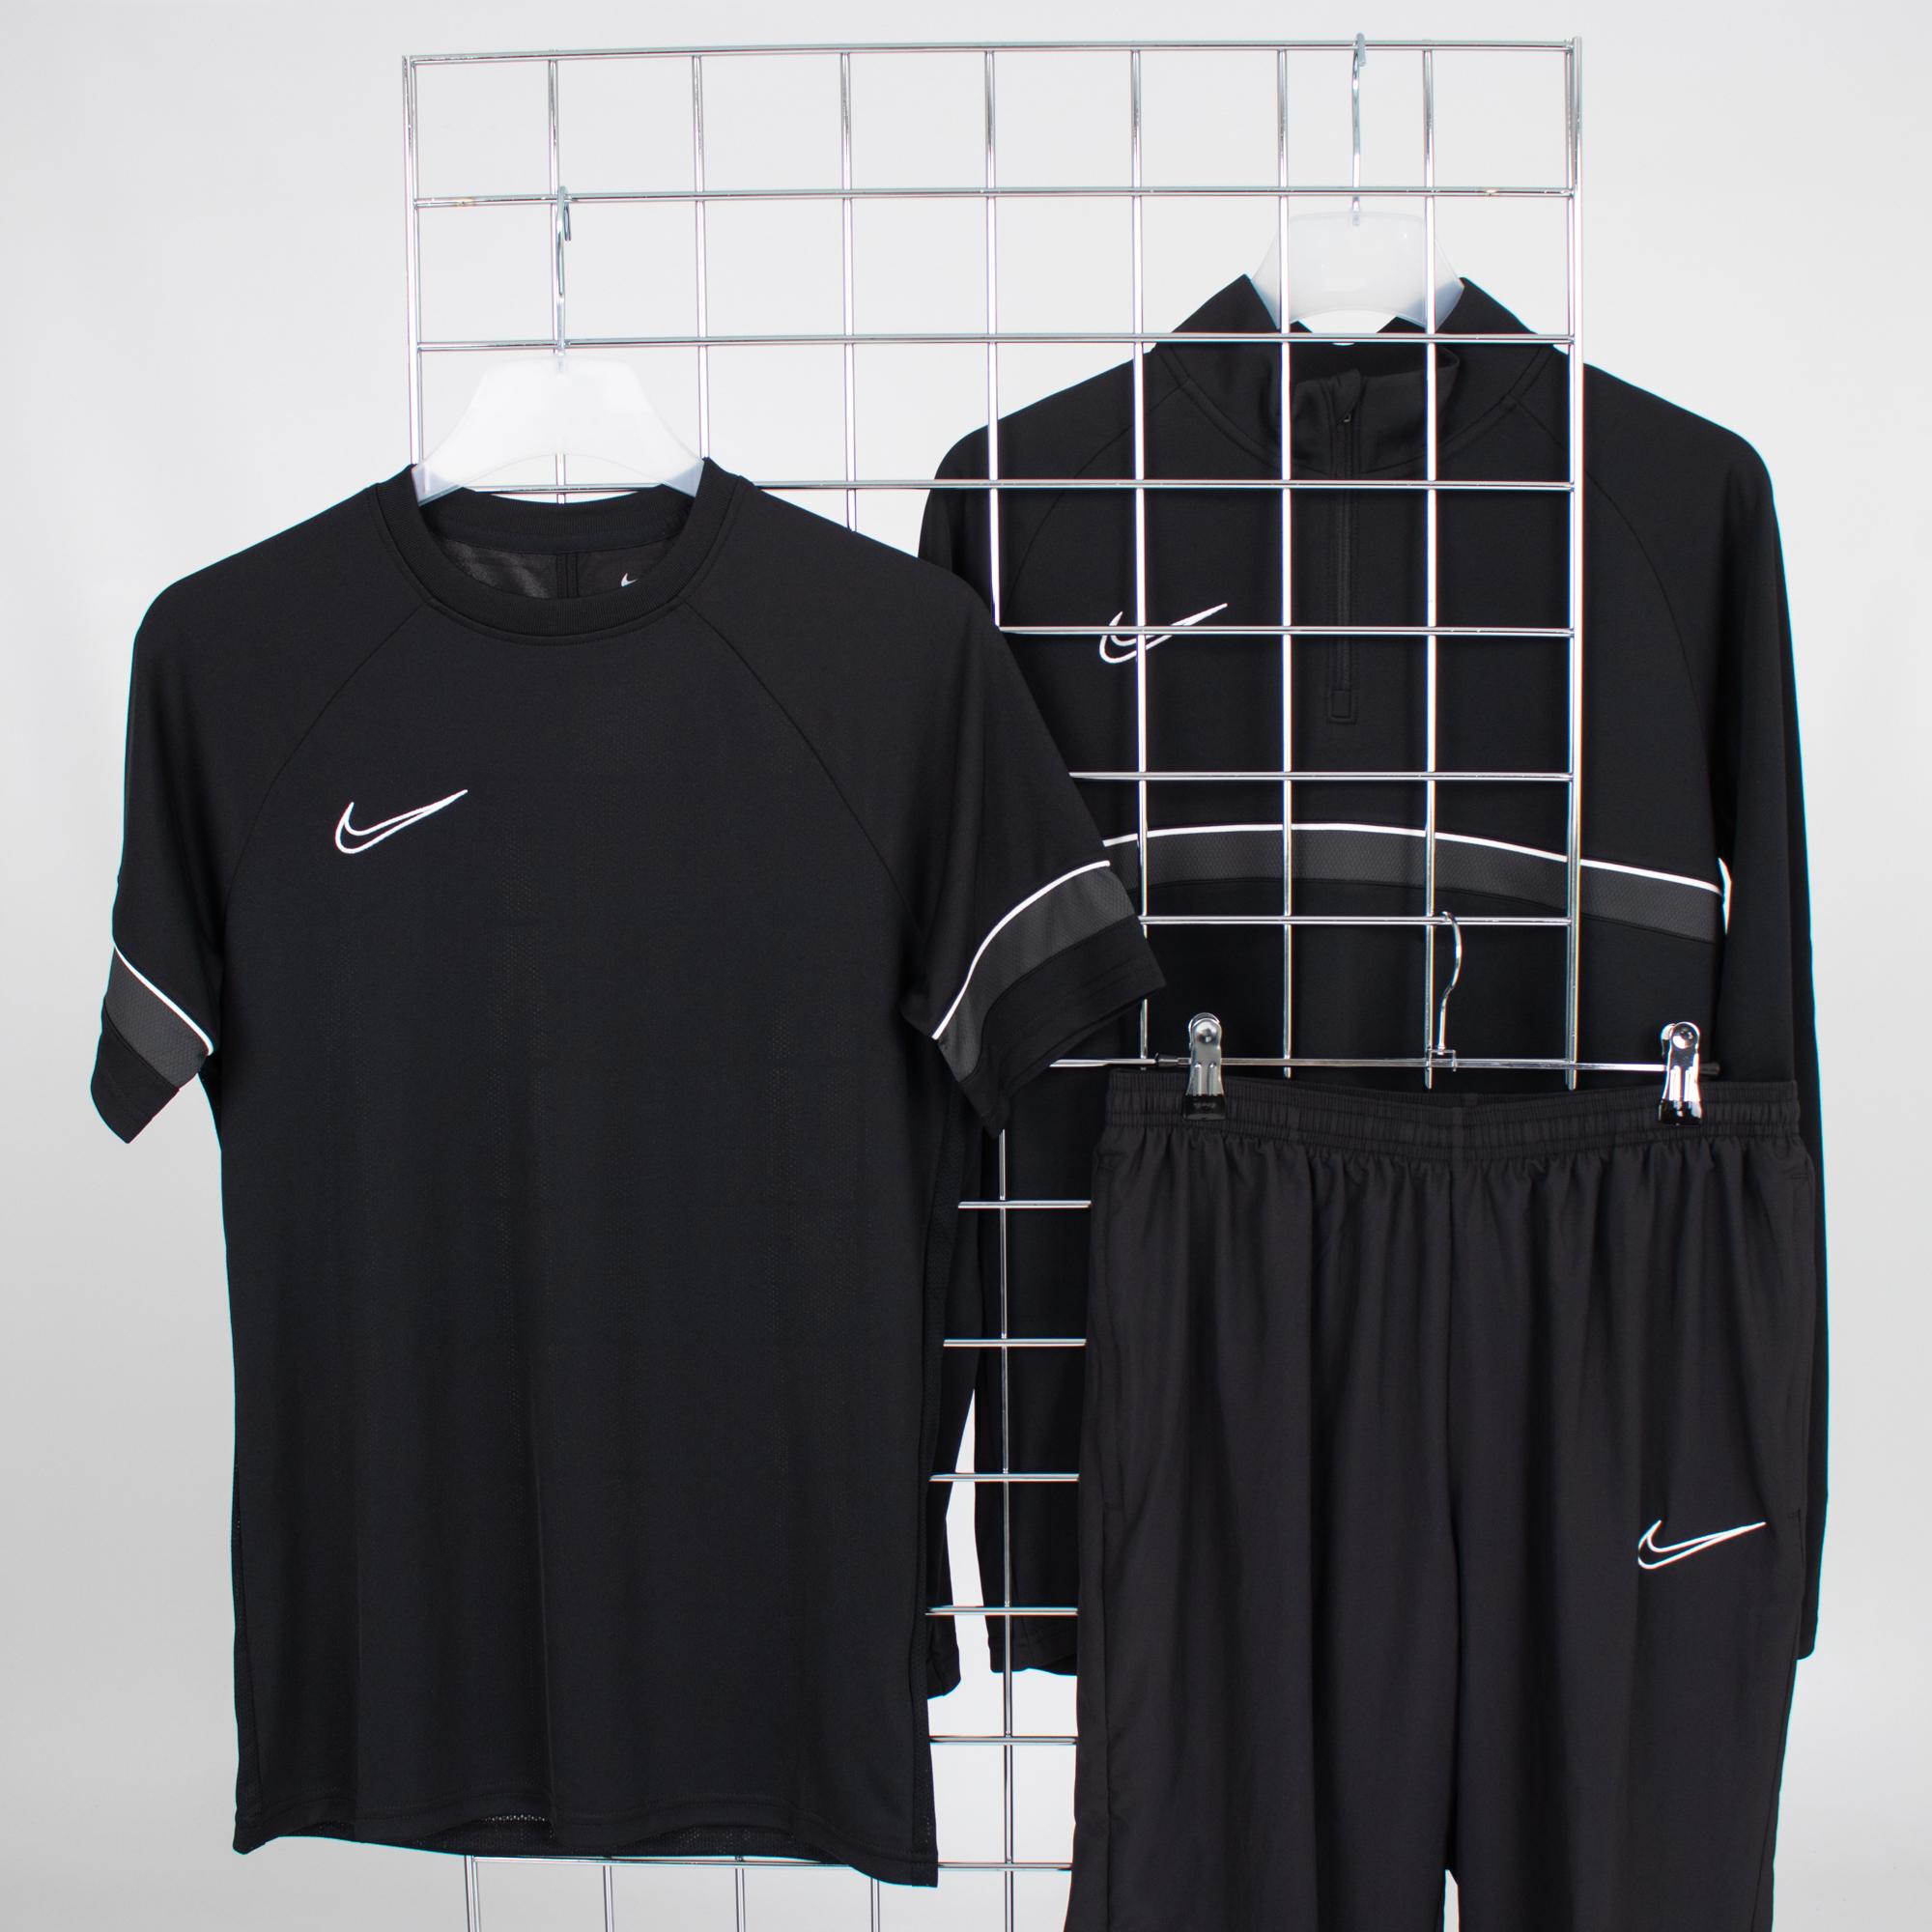 Nike Team Football 2021 Catalogue - Kitlocker.com Blog